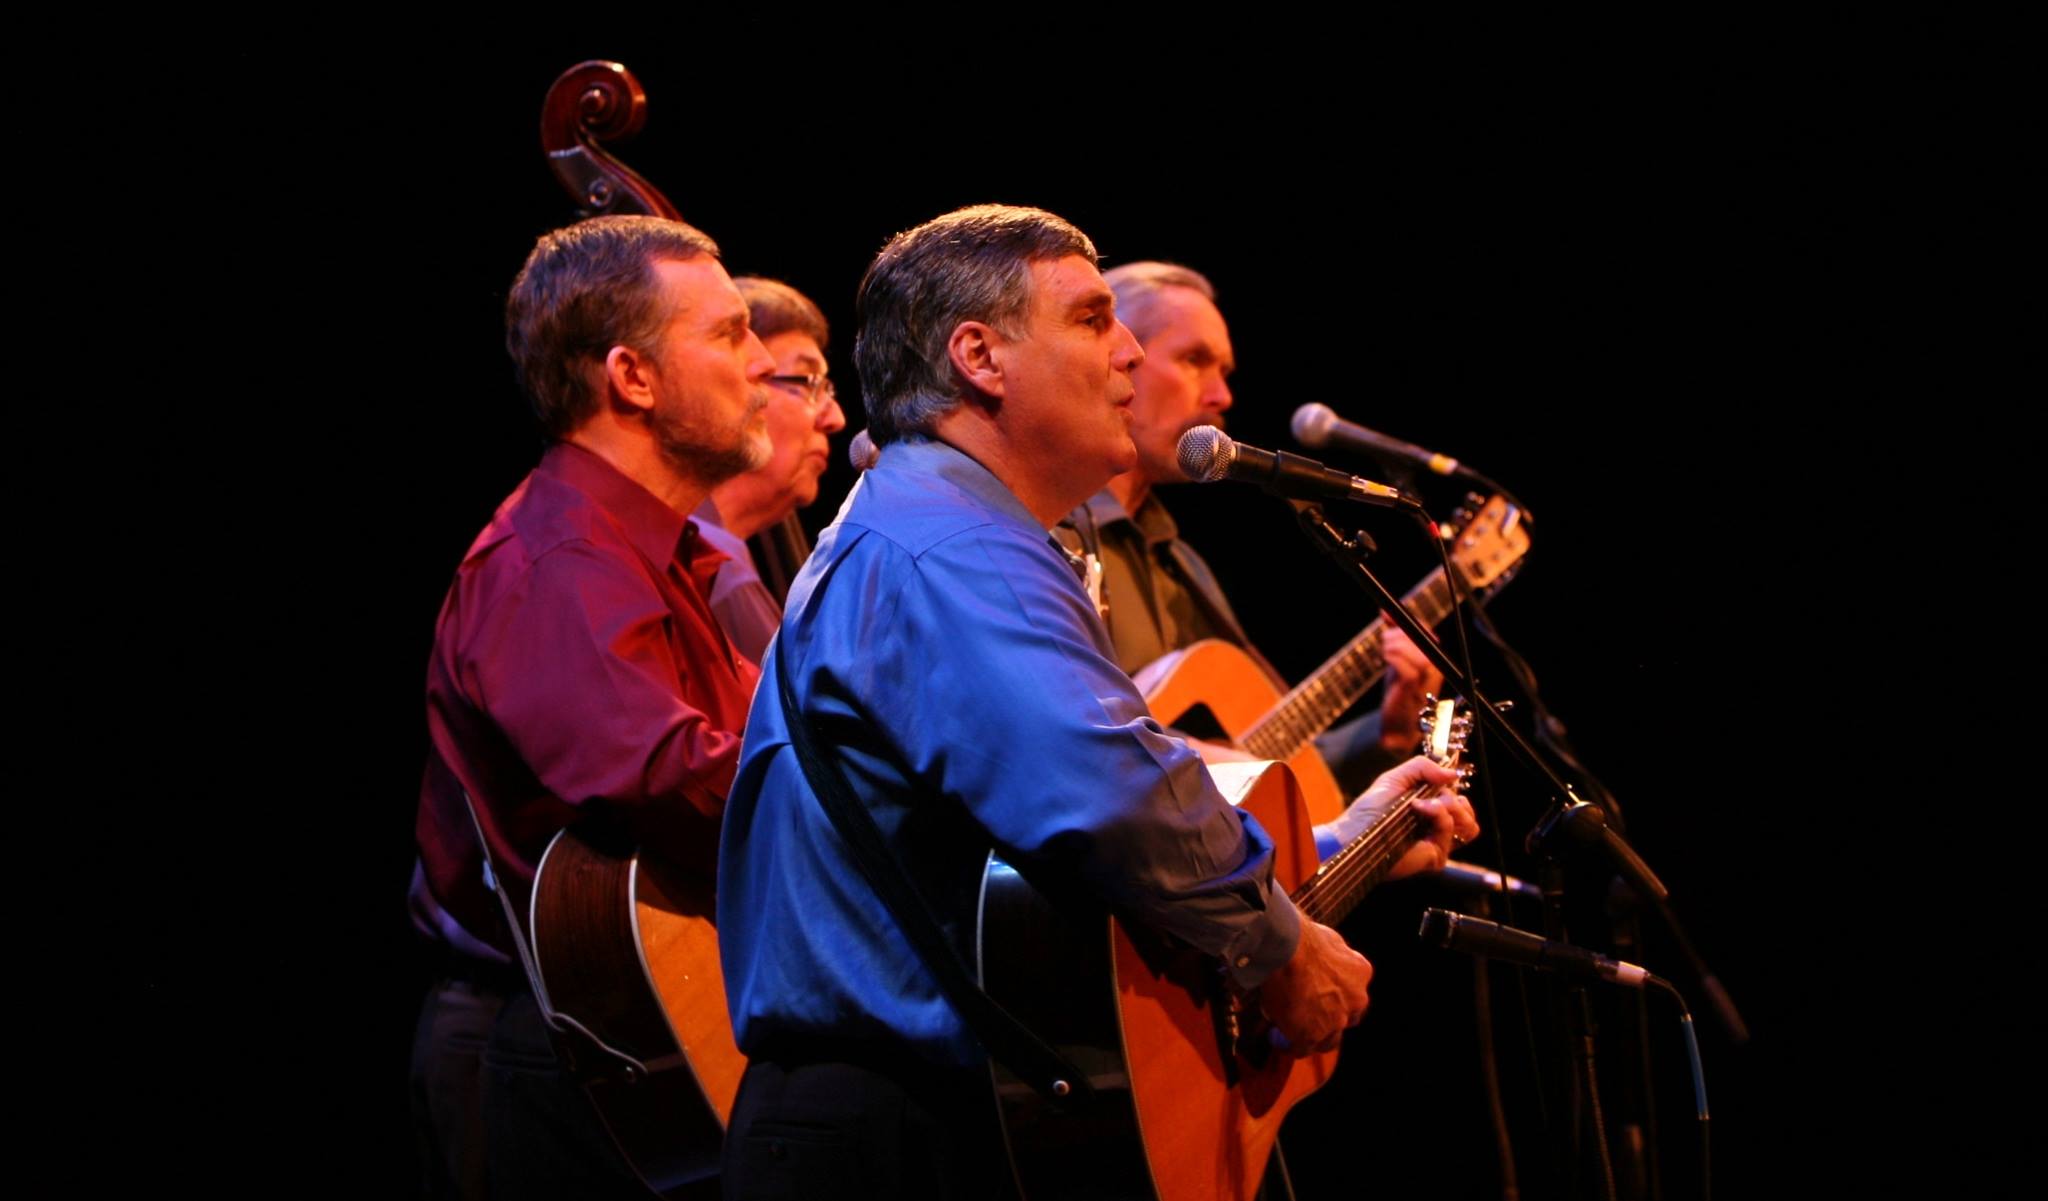 Left to right: Mike McCoy, Bob Flick, Mark Pearson, Karl Olson